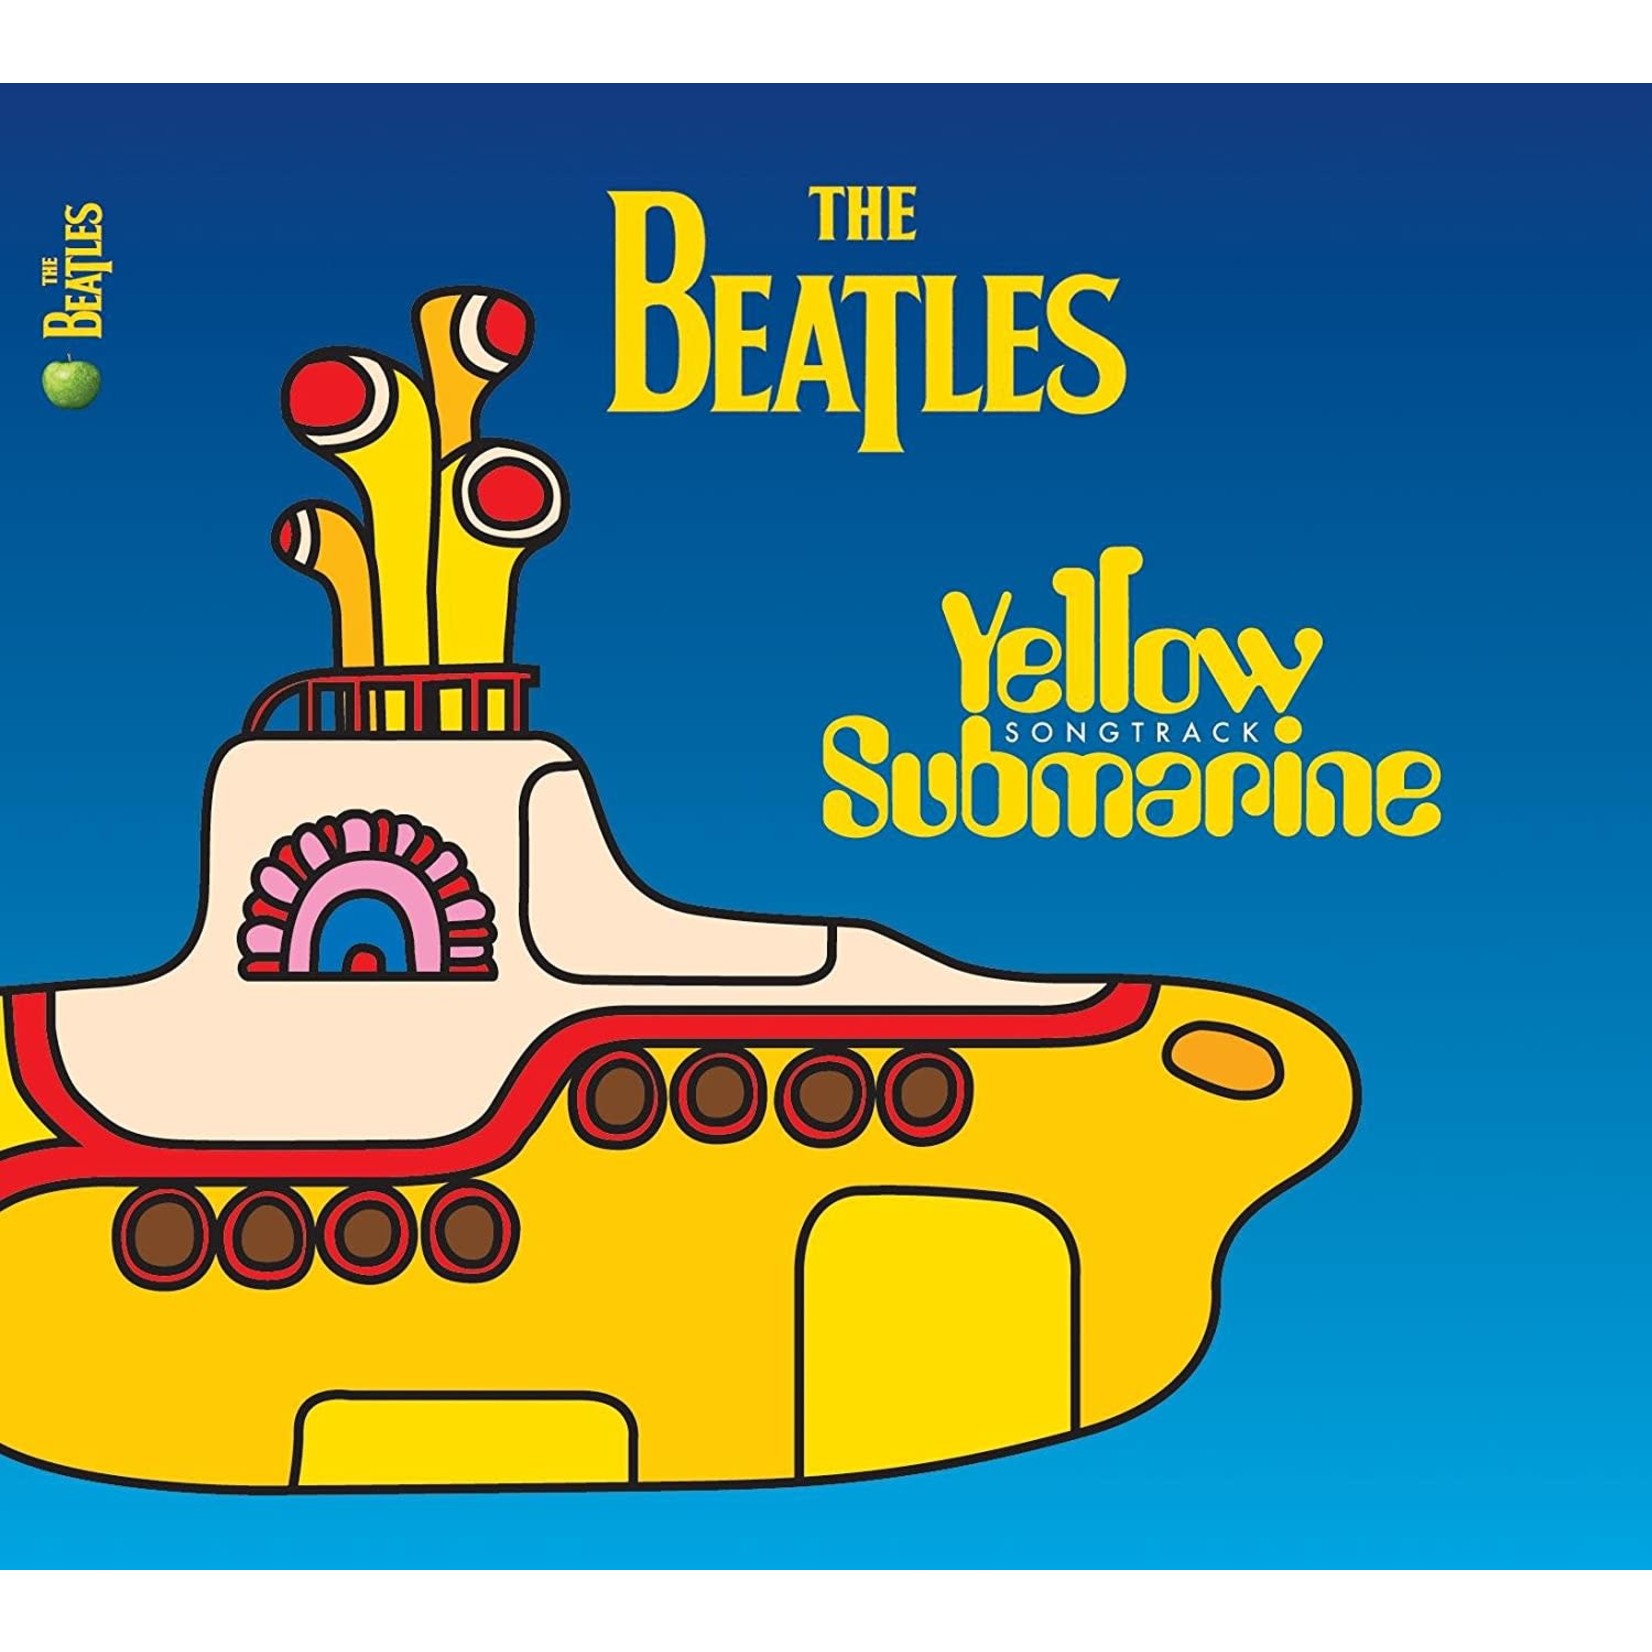 Beatles - Yellow Submarine Songtrack [USED CD]